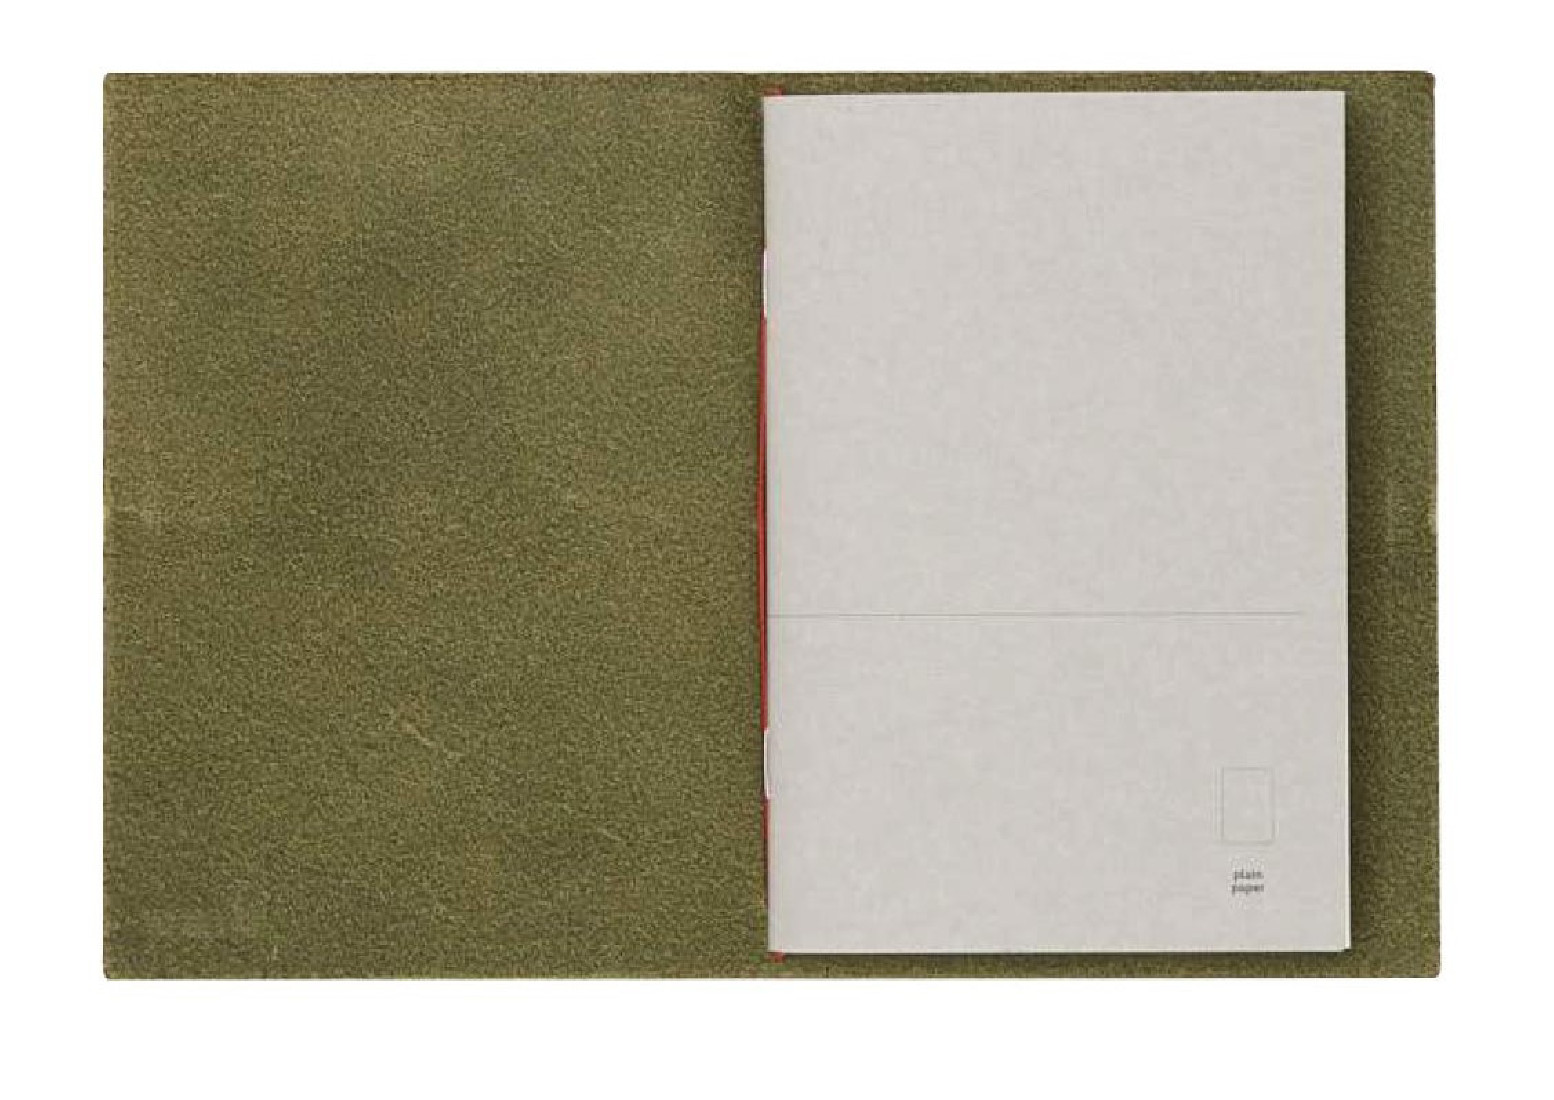 Paper Republic grand voyageur pocket botany green leather journal